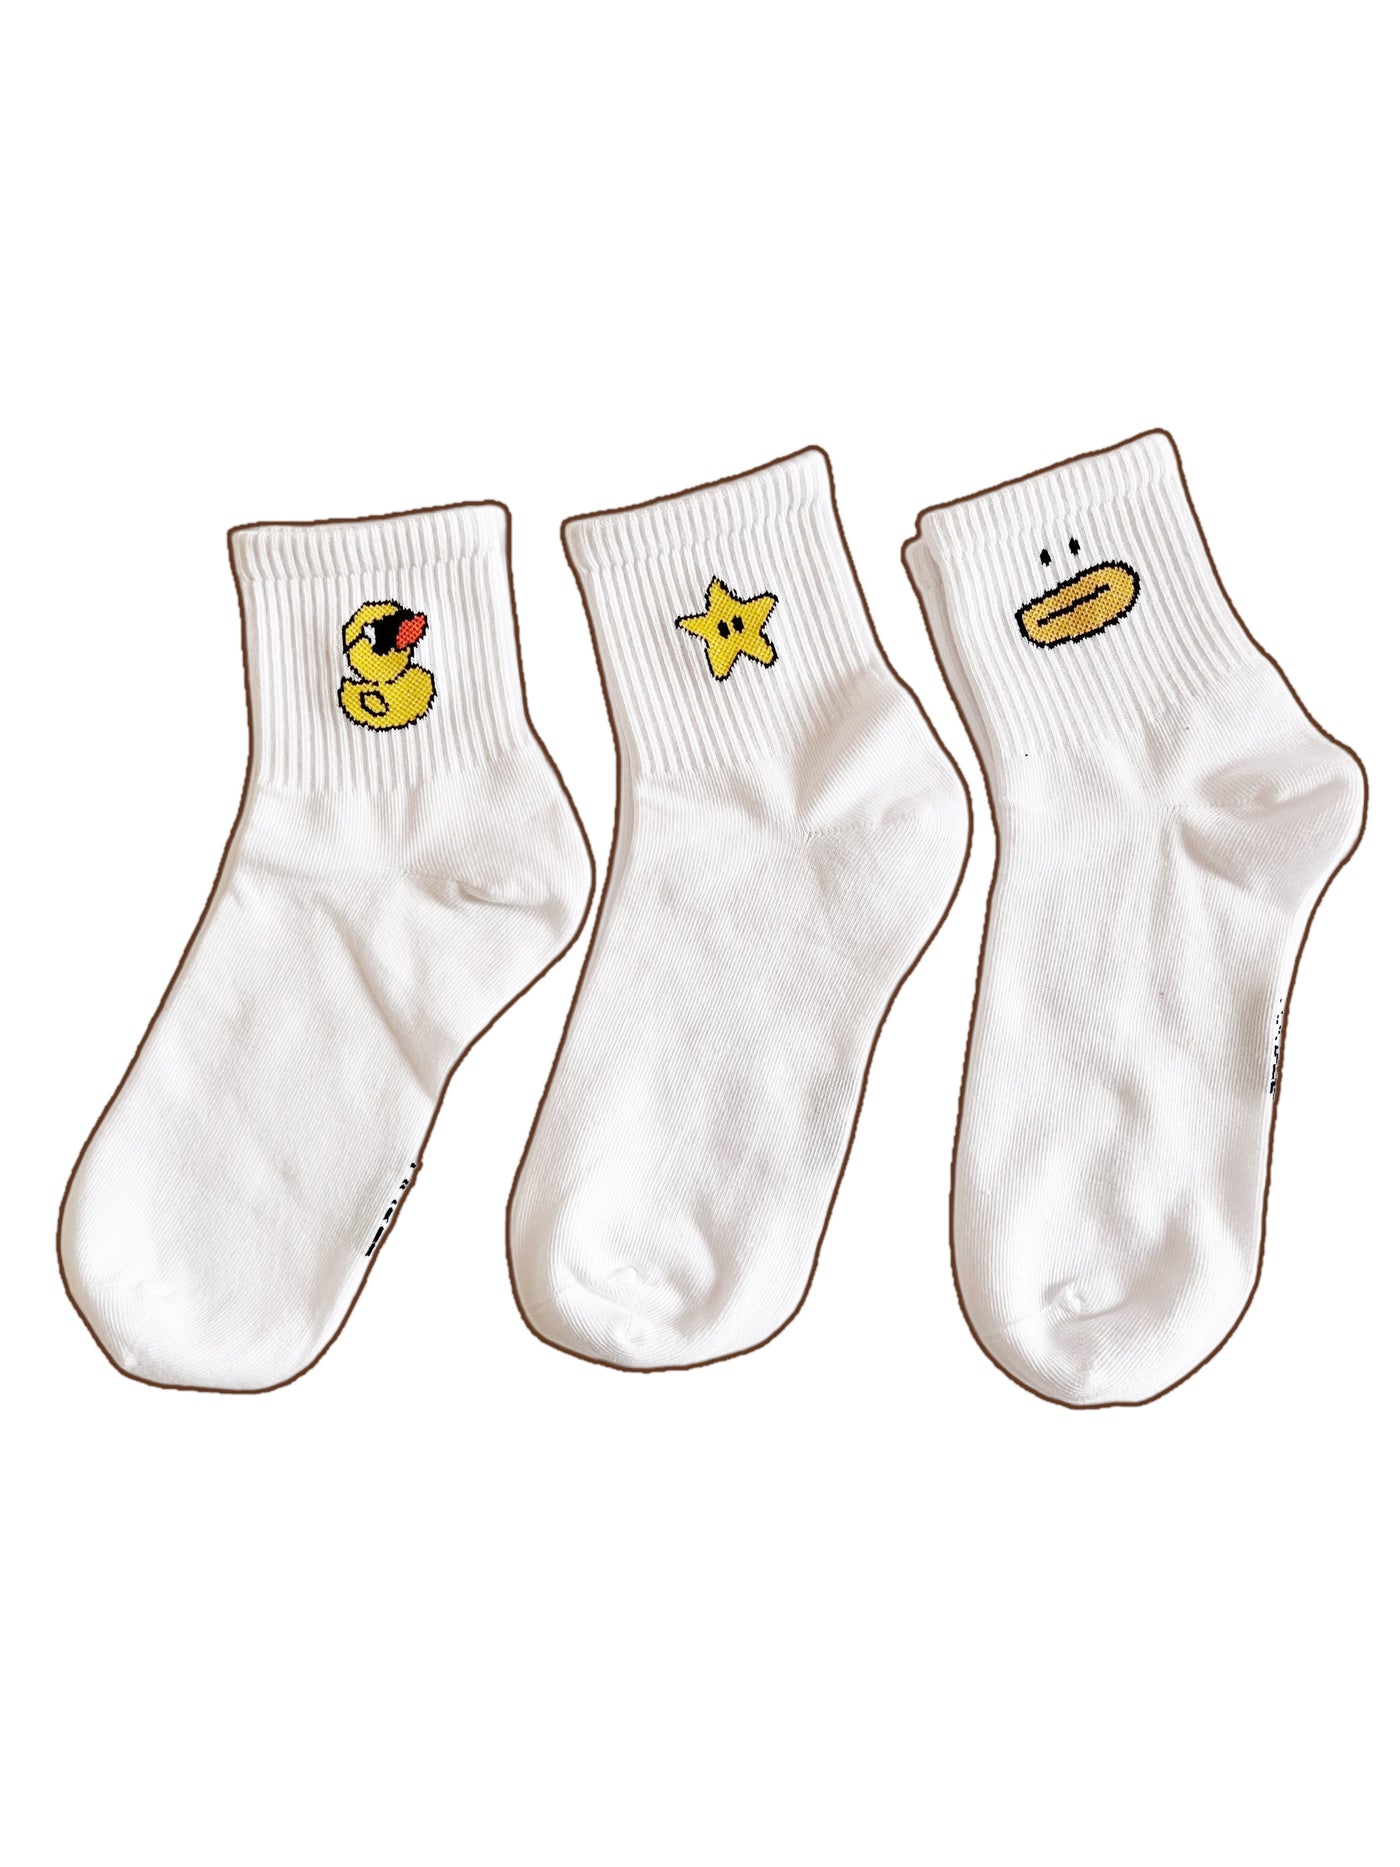 3pcs white embroidery icon socks set 2 - PROBOXS